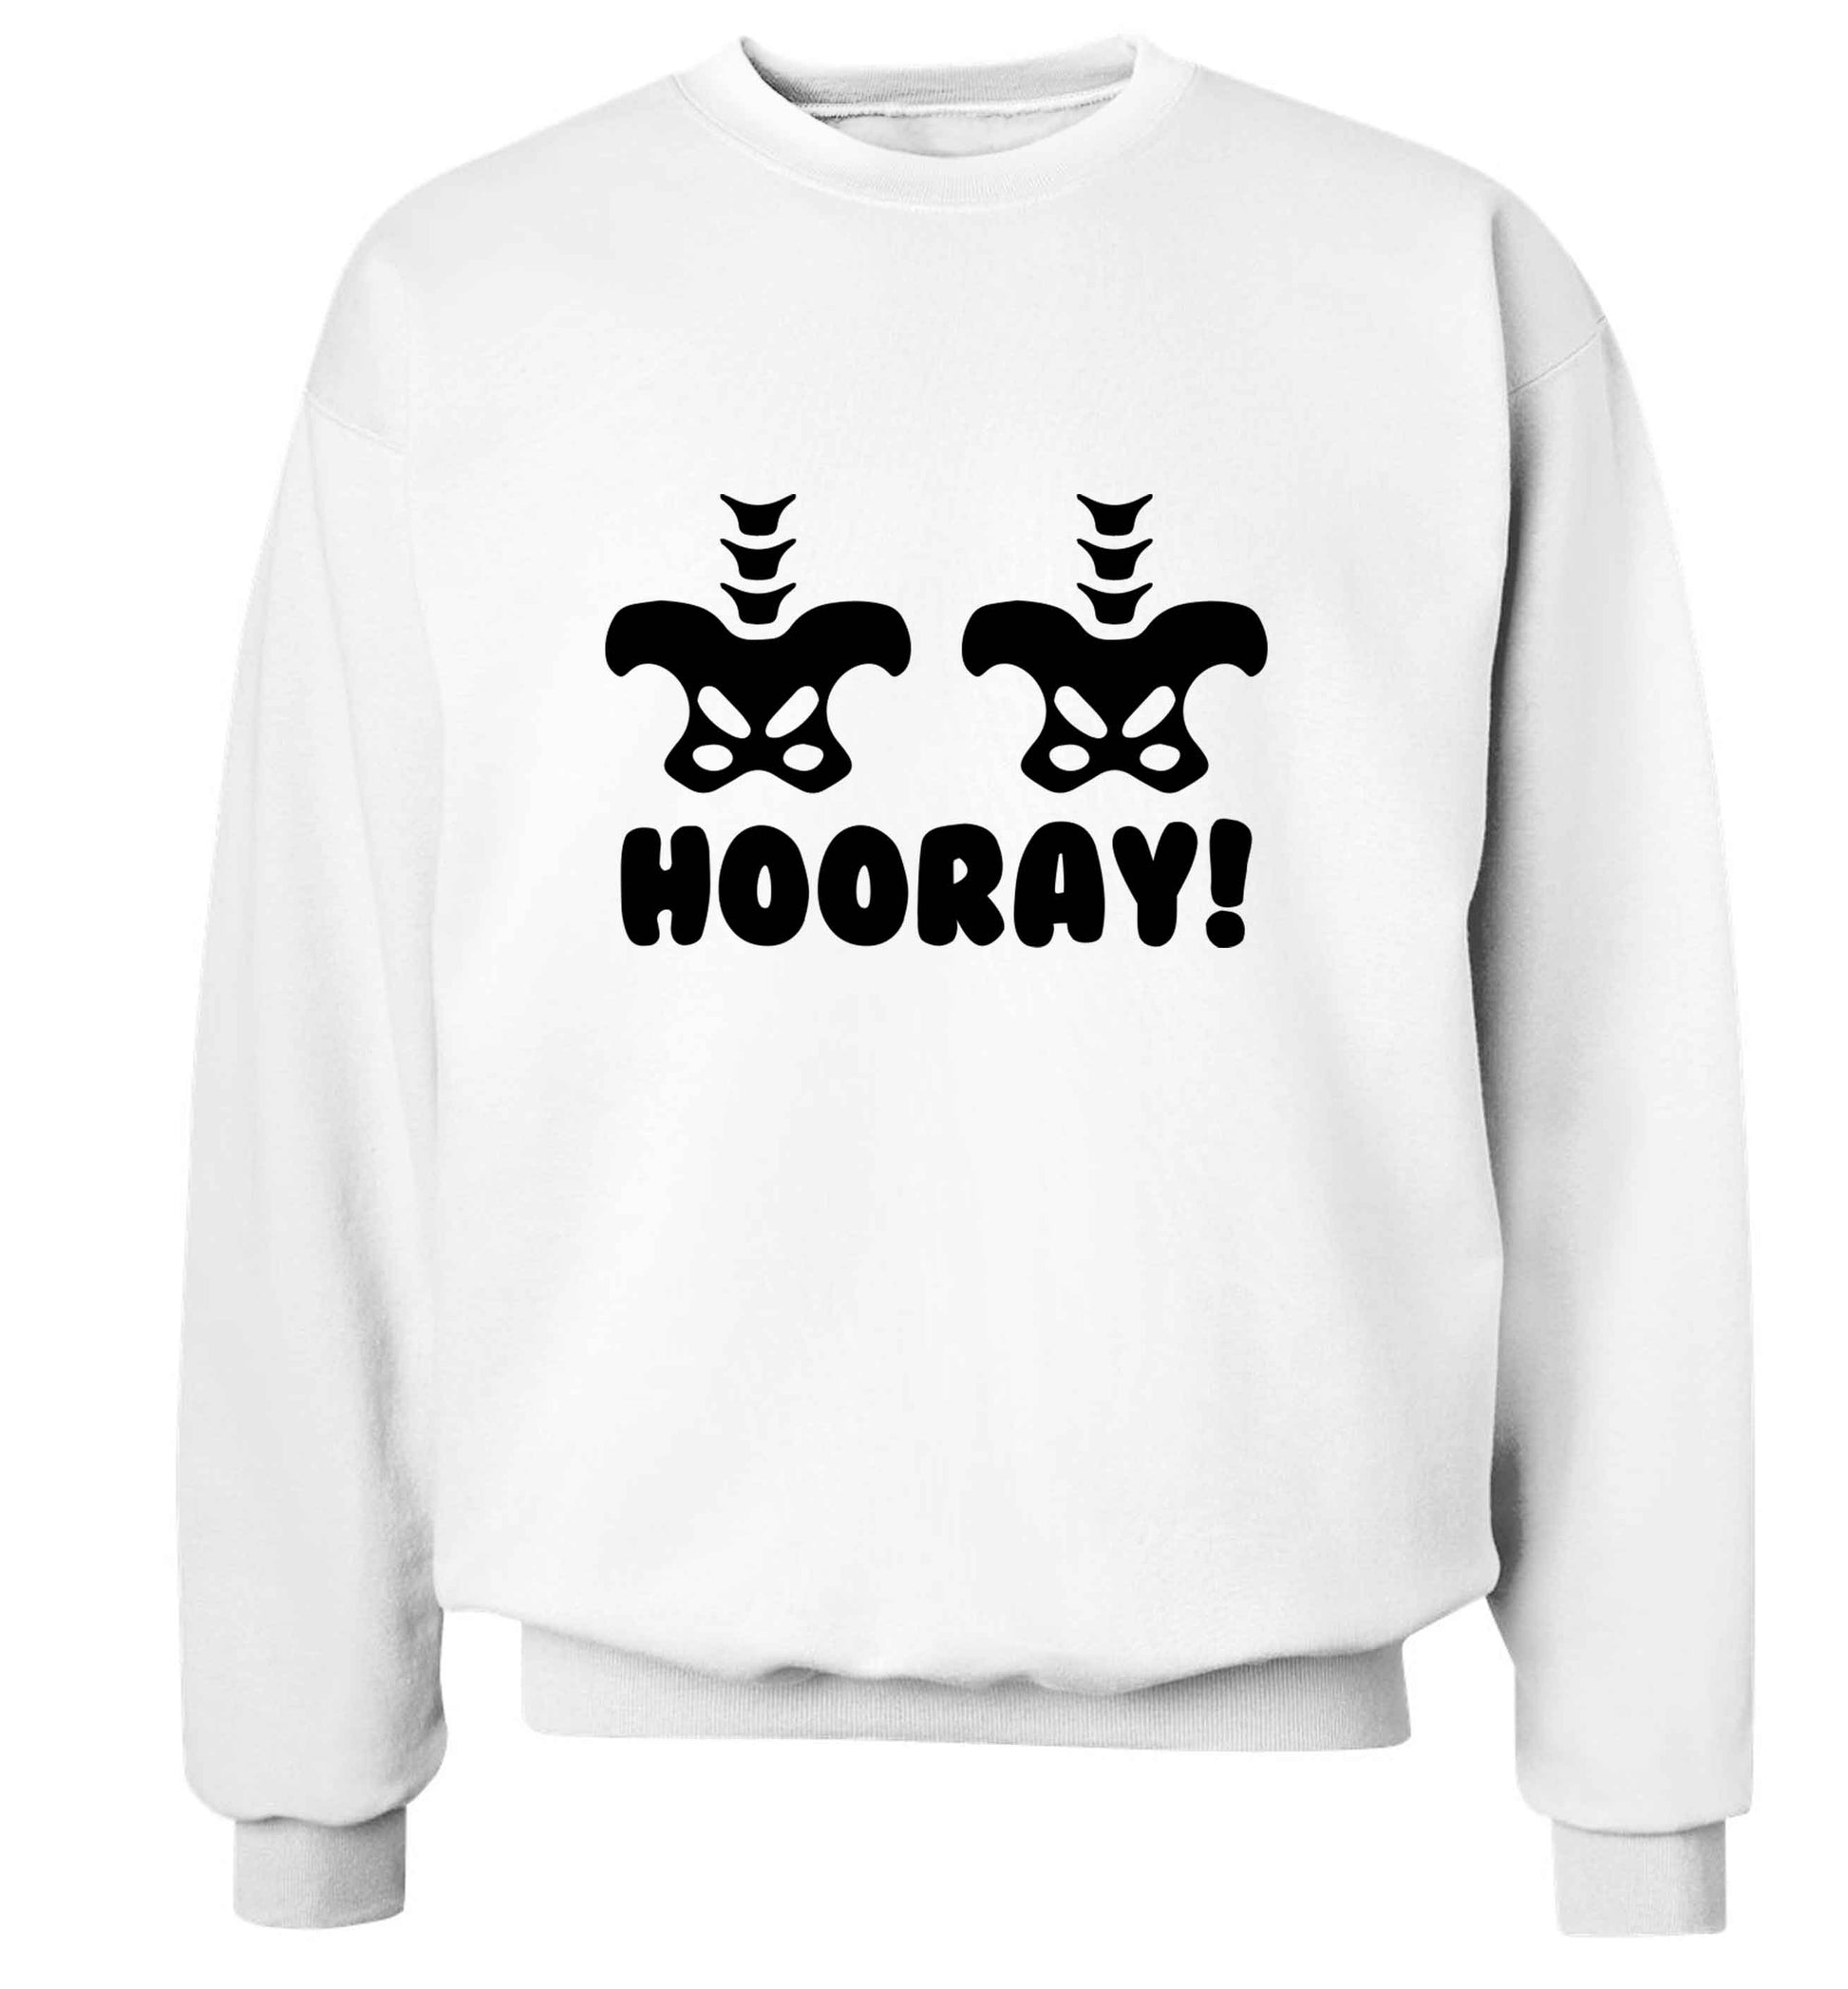 Hip Hip Hooray! adult's unisex white sweater 2XL